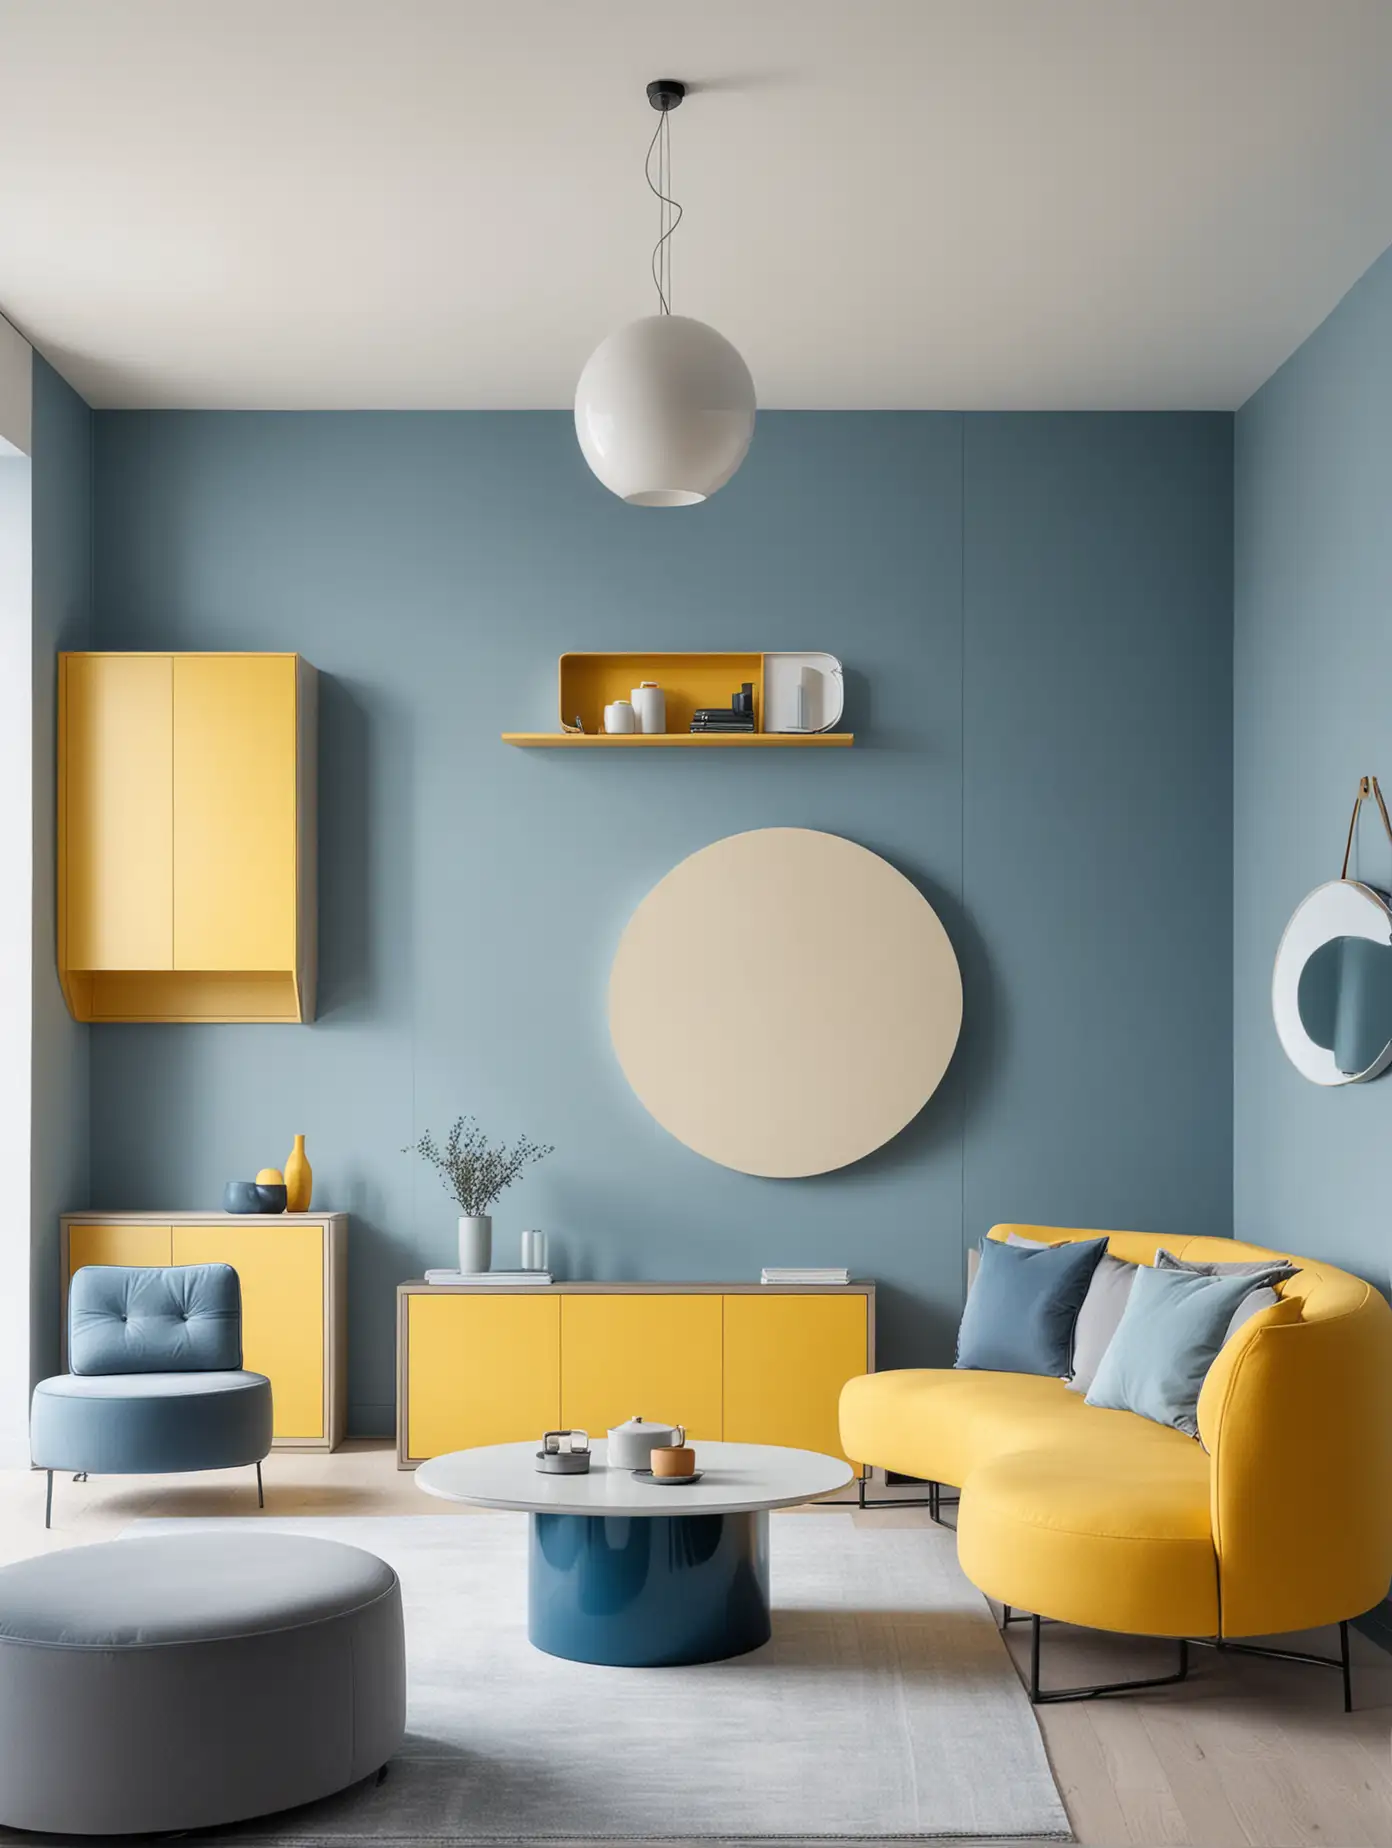 Designer Boutique Interior with Bold Color Blocking and Minimalist Furniture